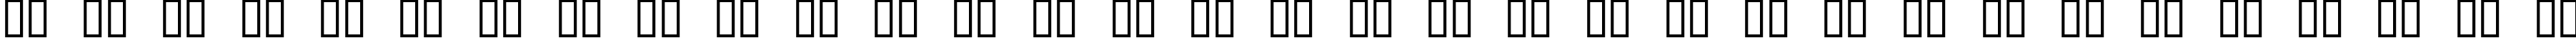 Пример написания русского алфавита шрифтом CType AOE